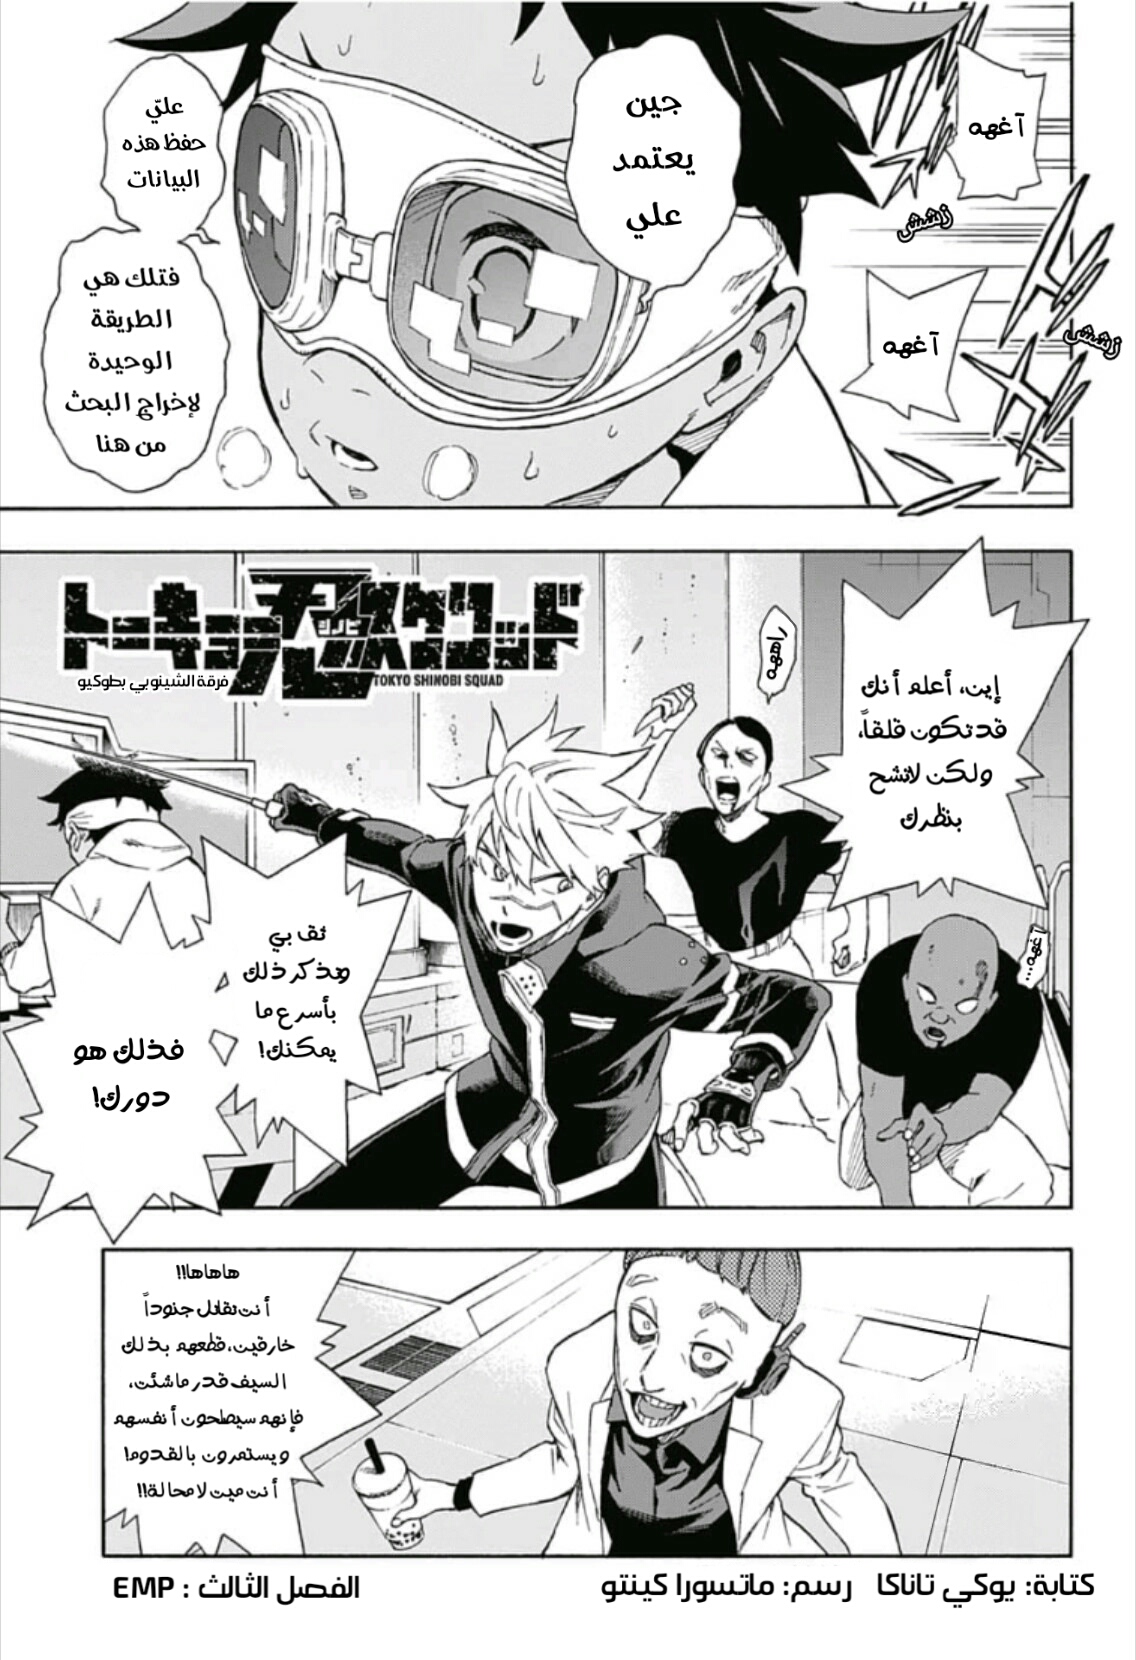 Tokyo Shinobi Squad: Chapter 5 - Page 1